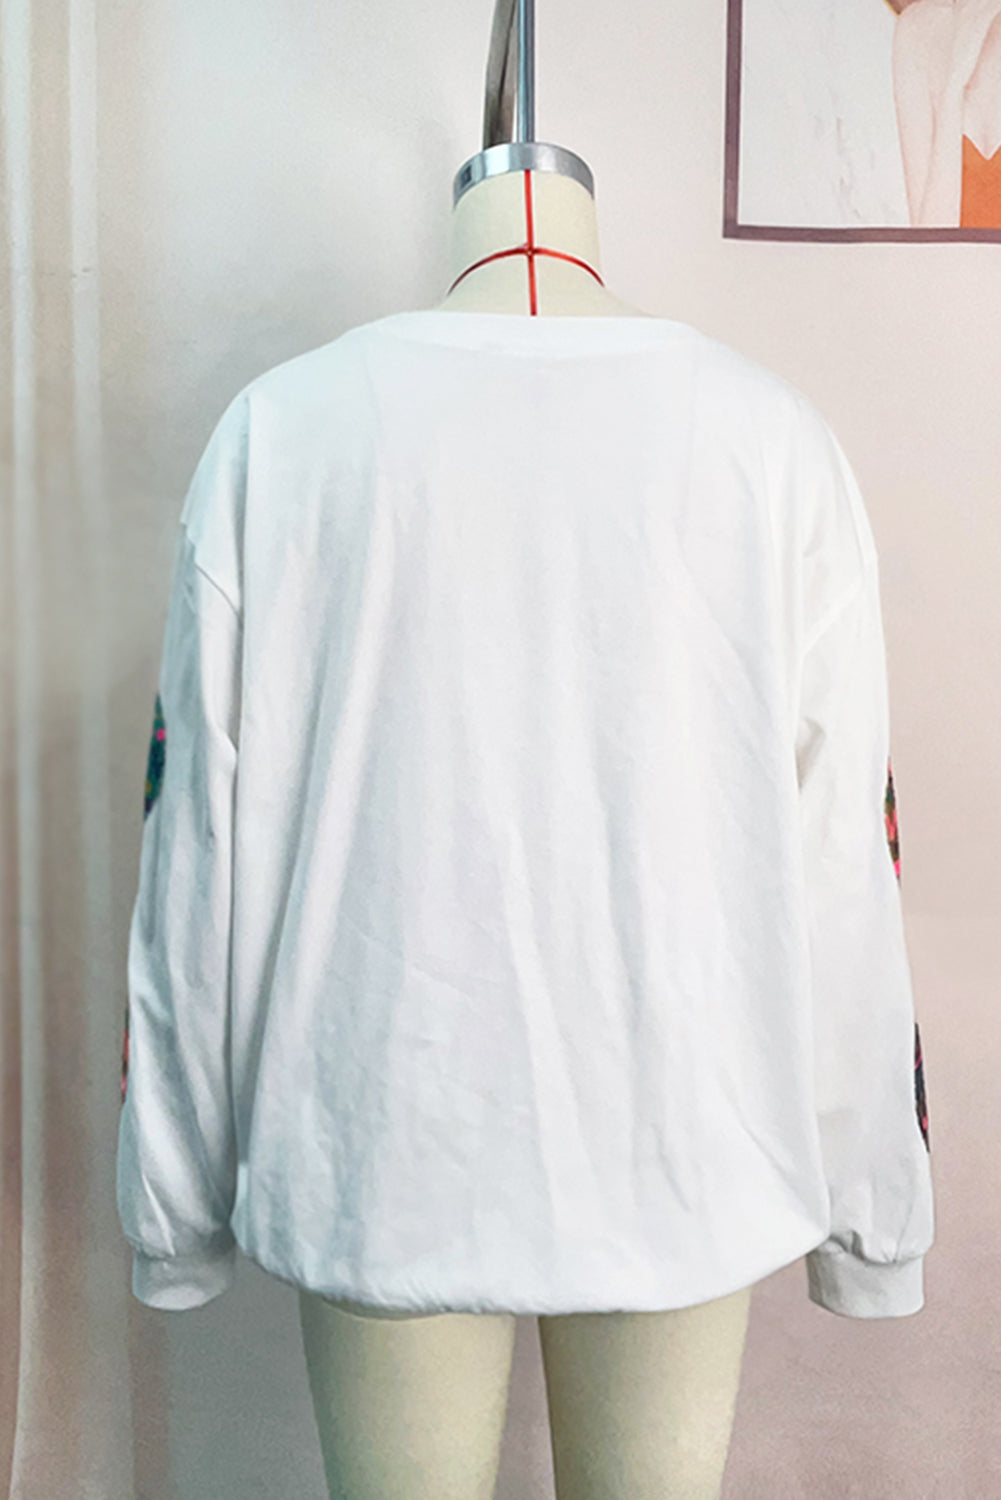 White Sequined Easter Egg Drop Shoulder Oversized Sweatshirt Sweatshirts & Hoodies JT's Designer Fashion